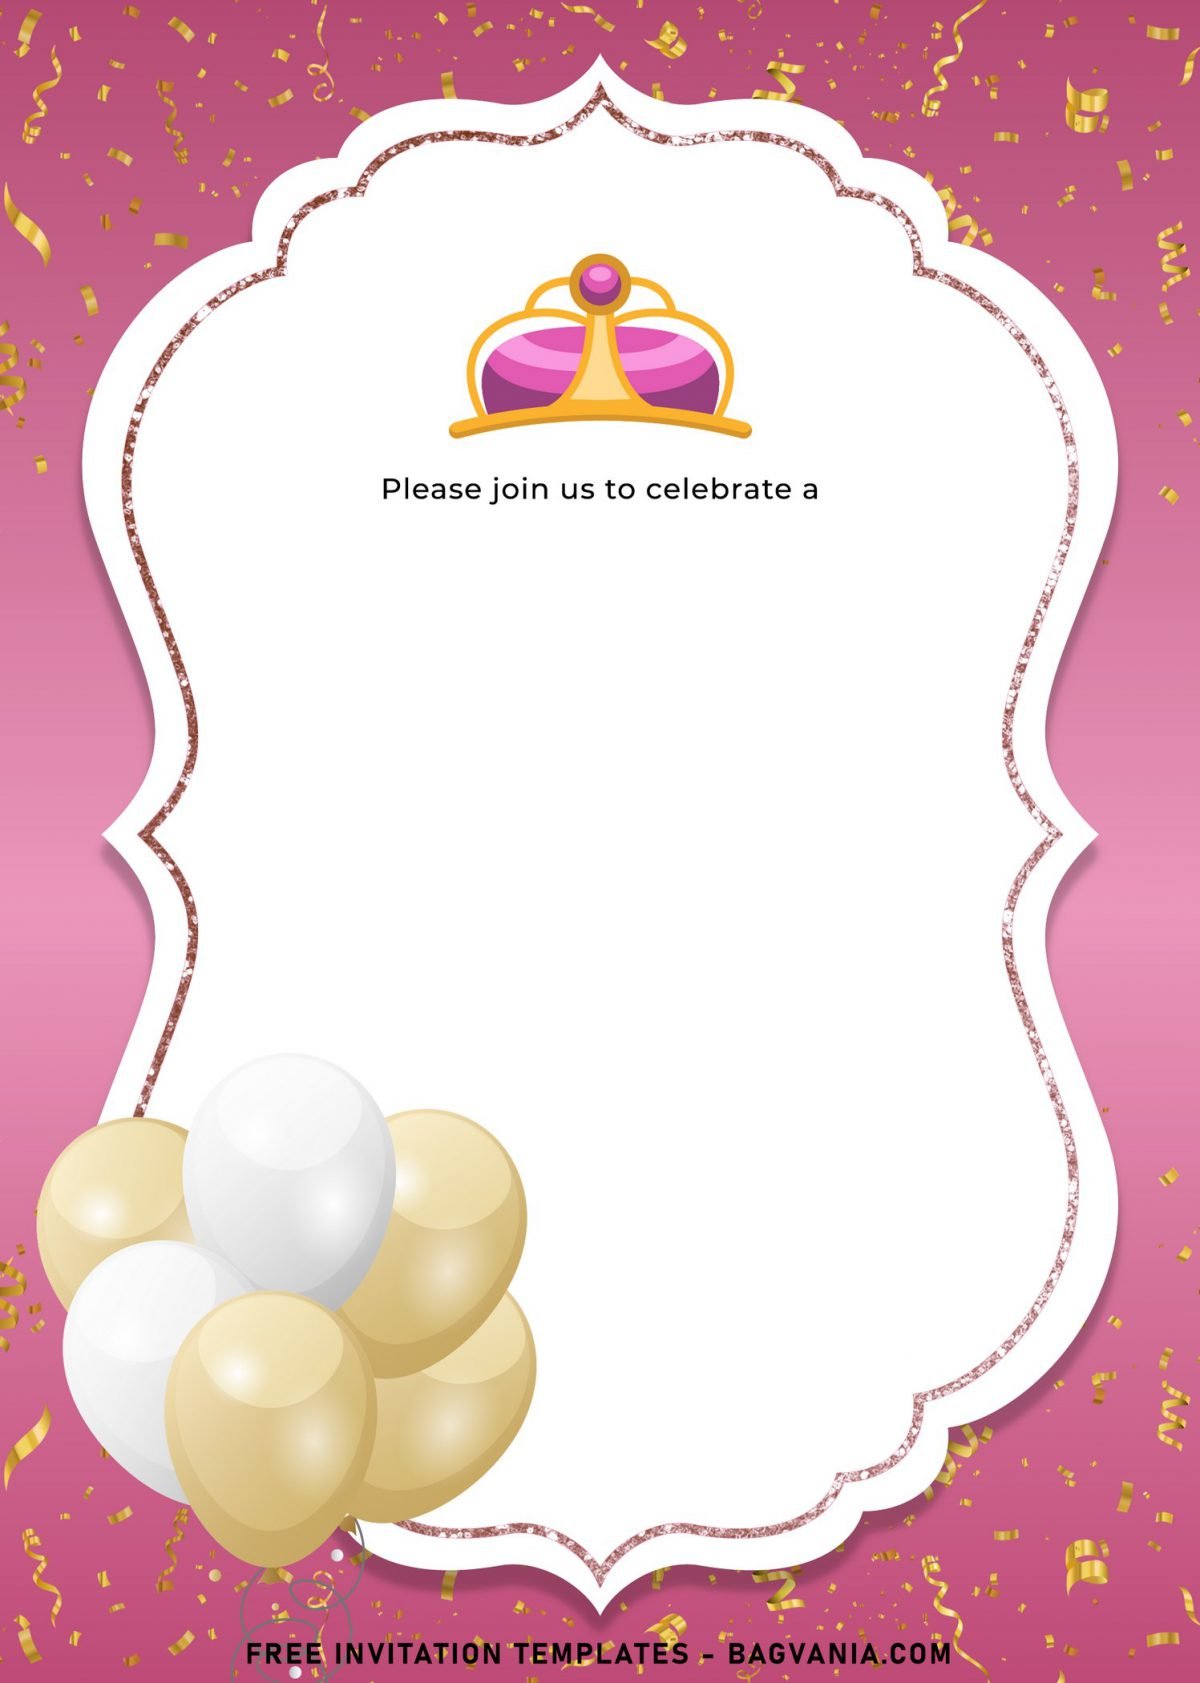 7+ Elegant Birthday Invitation Templates For Your Kid's Upcoming Birthday and has Princess Tiara